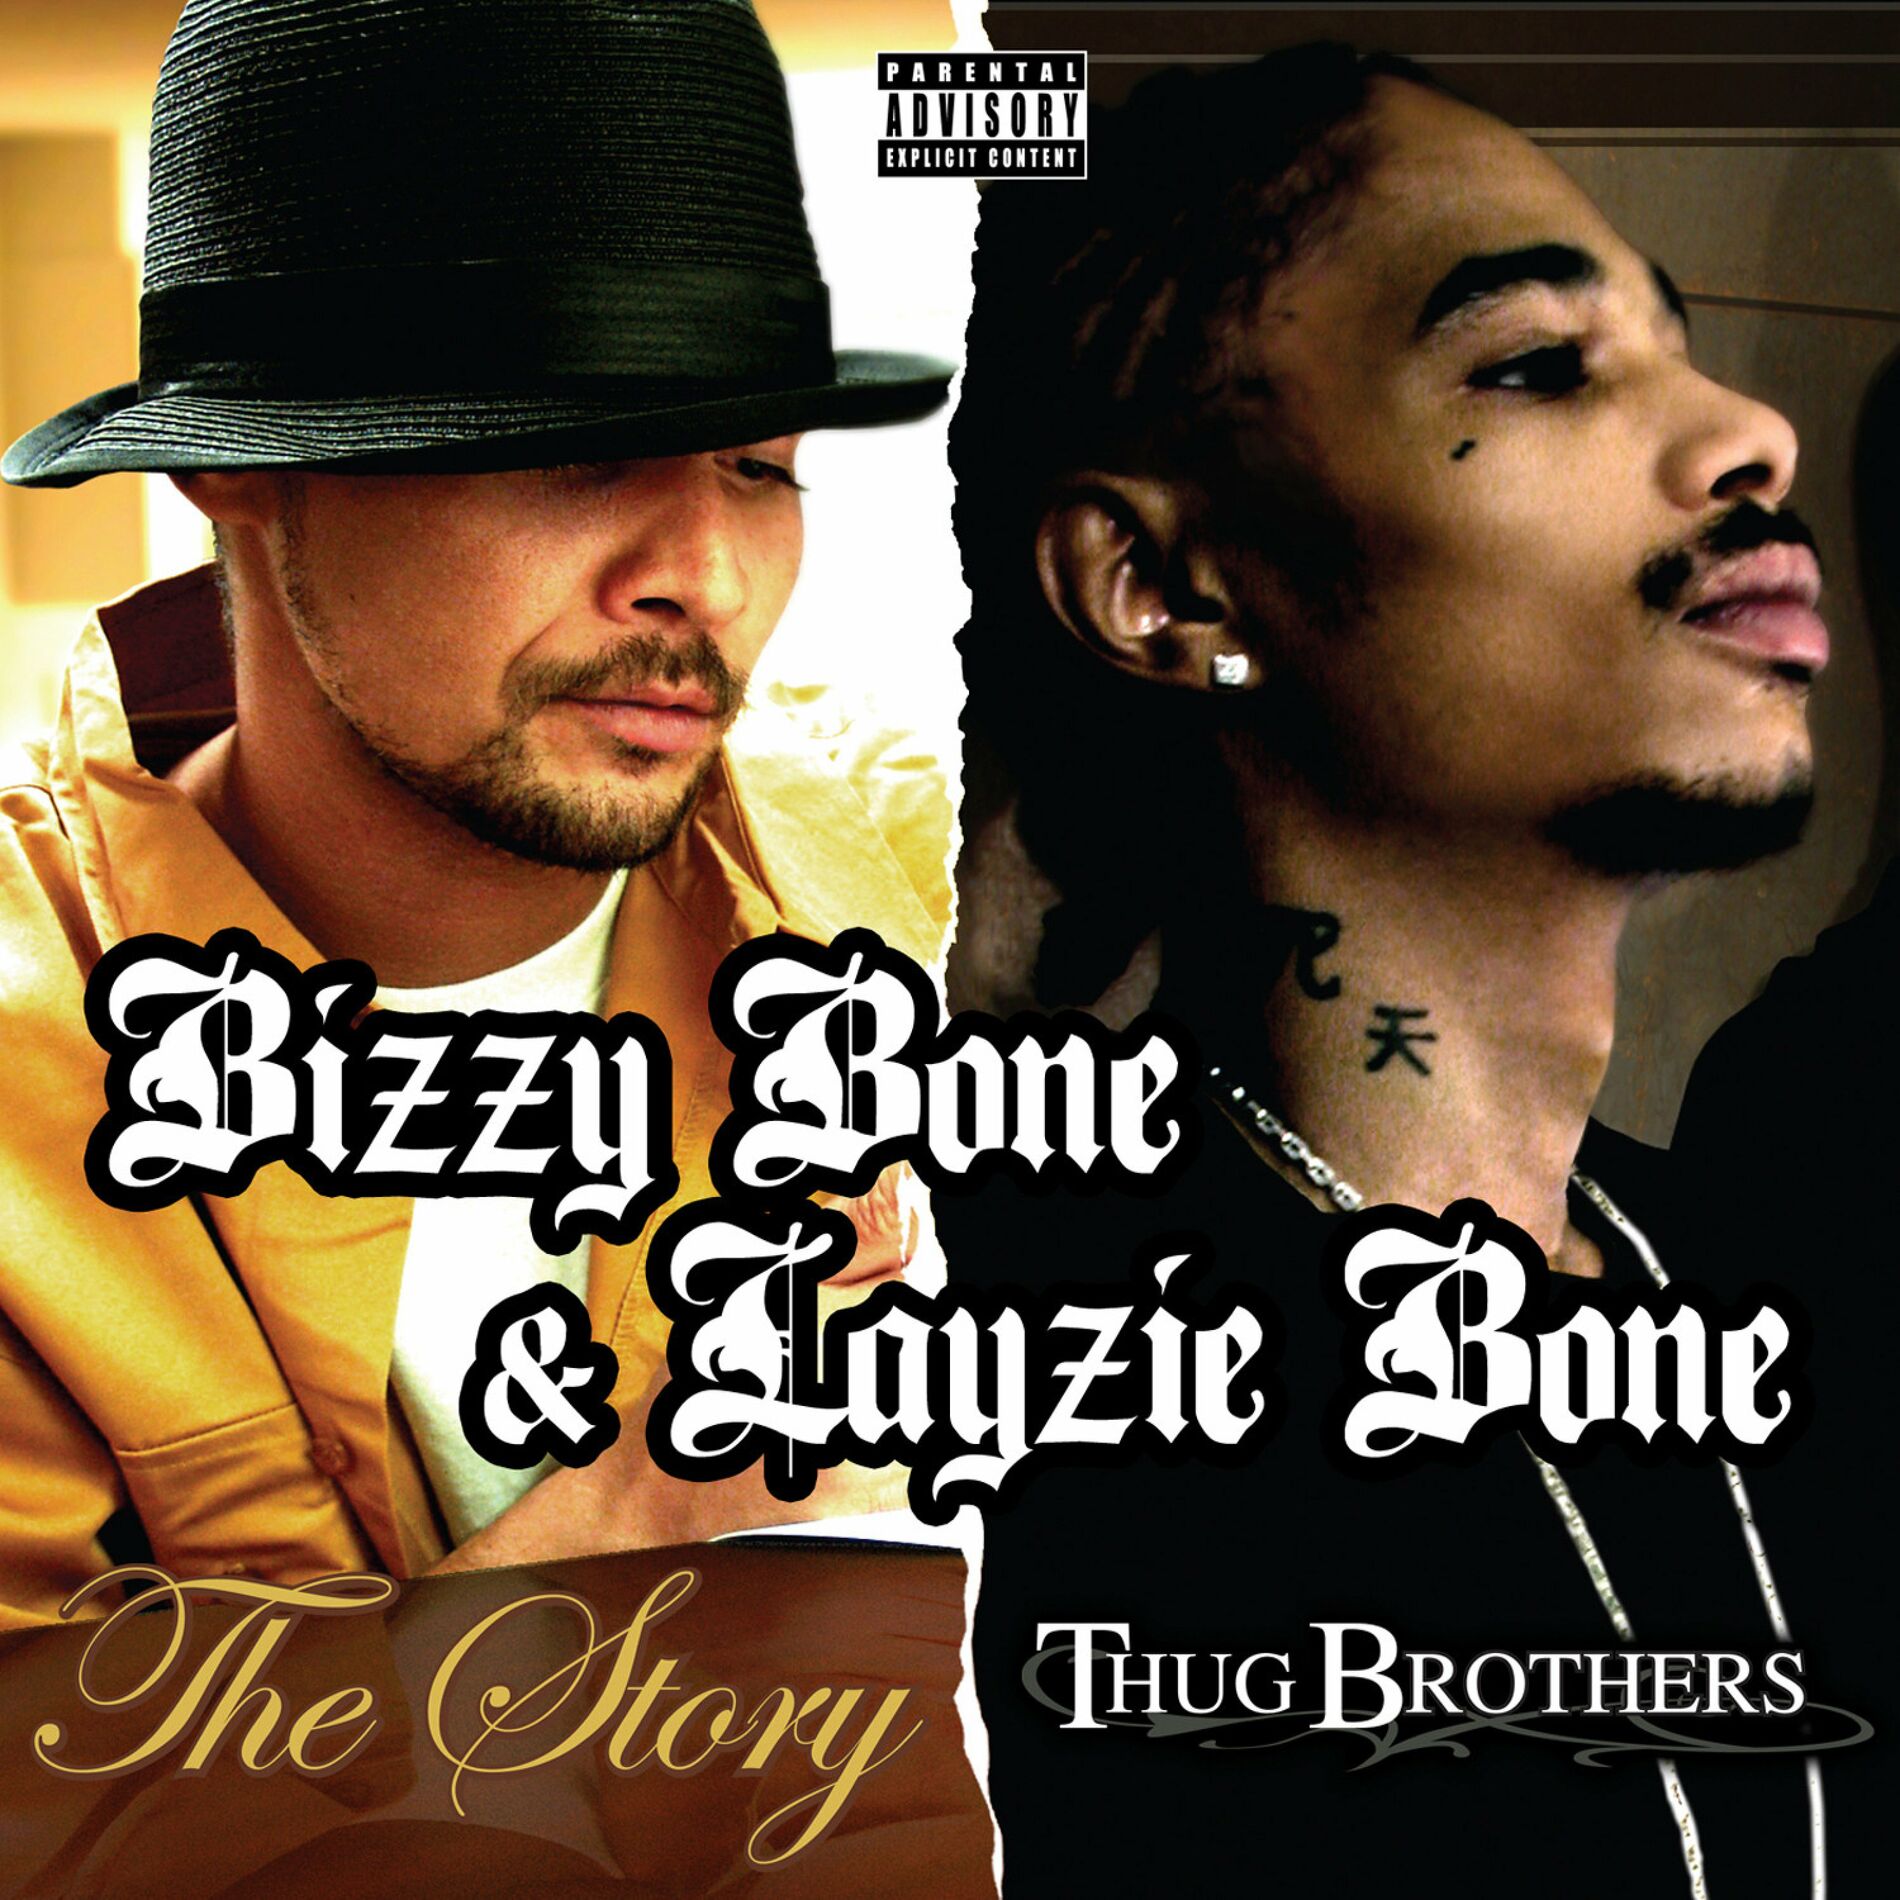 Bizzy Bone: albums, songs, playlists | Listen on Deezer